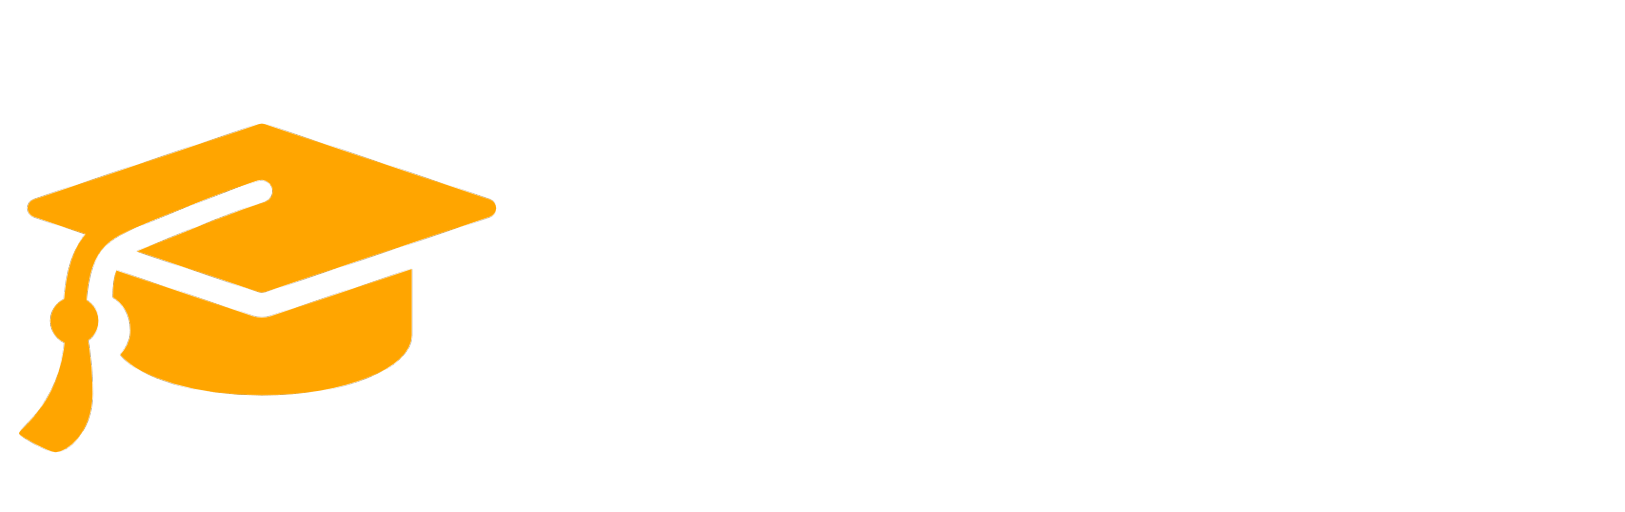 1040 Logo - 1040 Corp – Service Bureau and Tax Preparer Professionals support